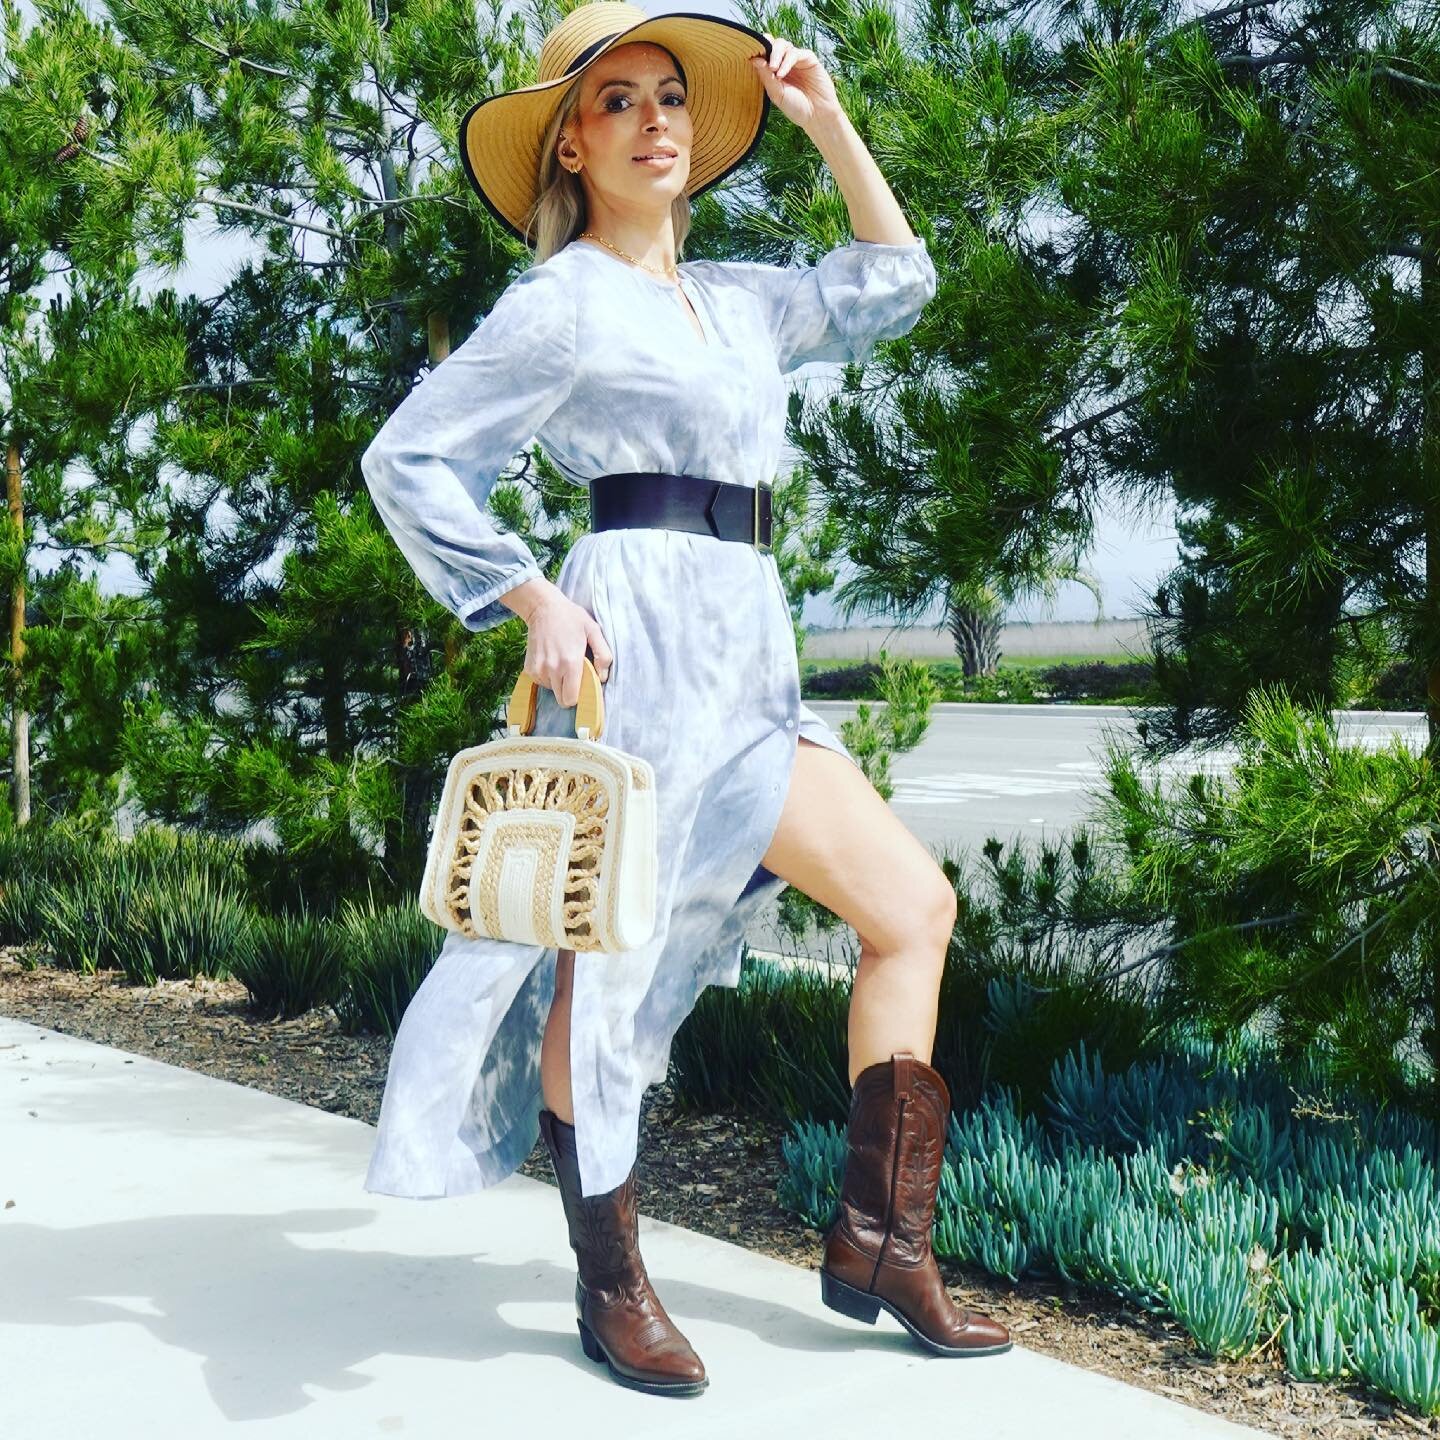 @zara #tiedyedress and @poshmark cowboy boots- yes it&rsquo;s a vibe!!!! Loving this trend when done in a subtle way like this shirt dress from #zara. #zarawoman #zarafashion #zaraoutfit #zaradress .
.
#ocinfluencer #fashionover40 #orangecounty #styl